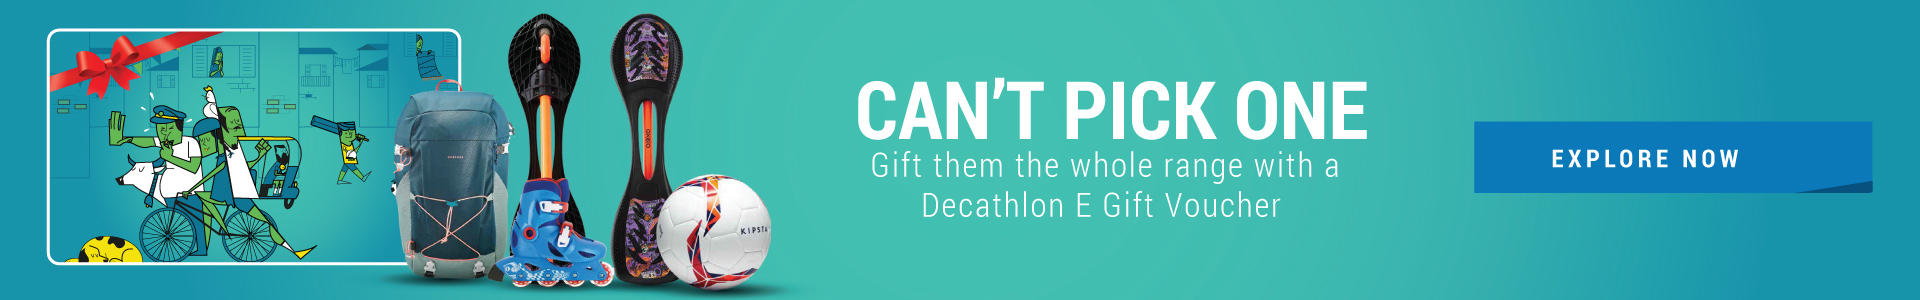 decathlon online carrom board